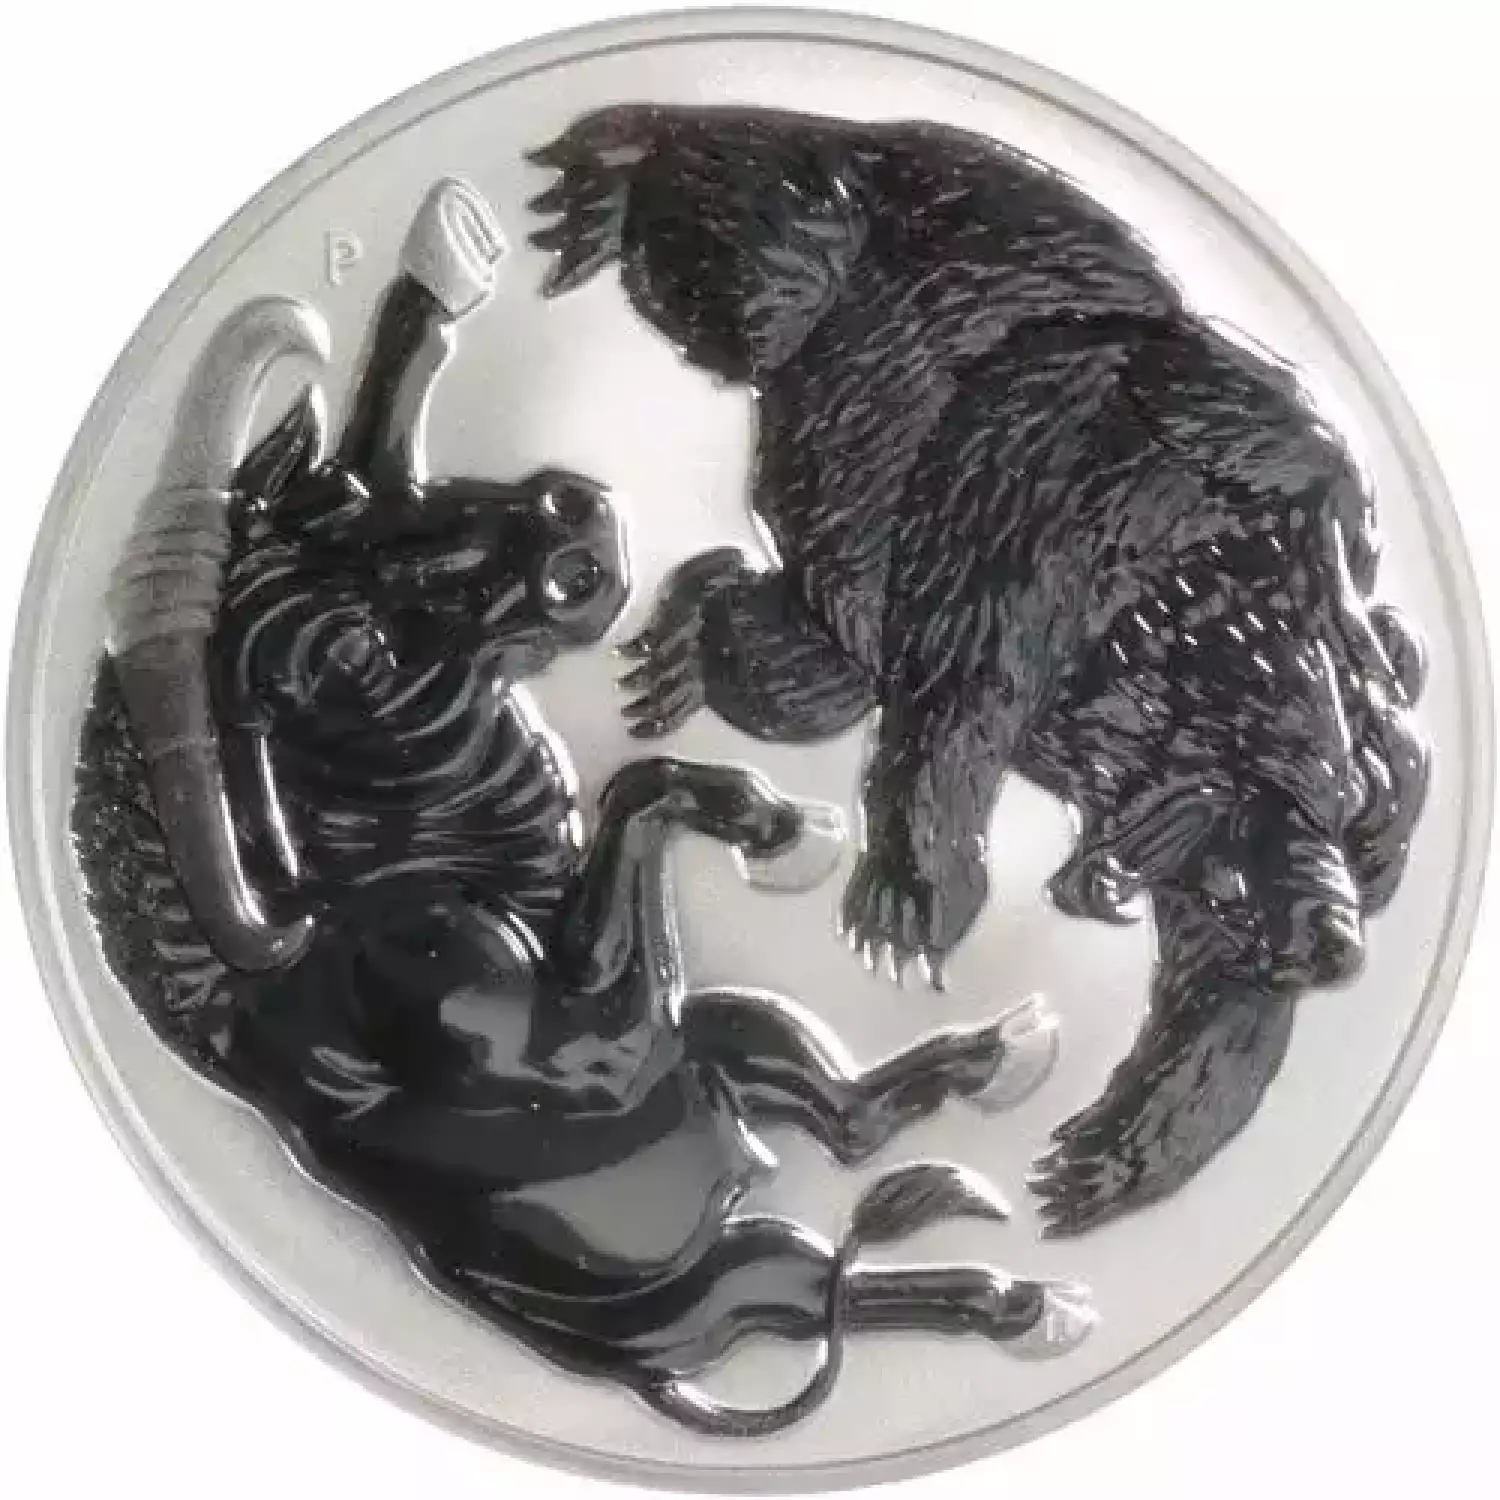 2020 1 oz Australian Silver Bull and Bear Coin (BU)